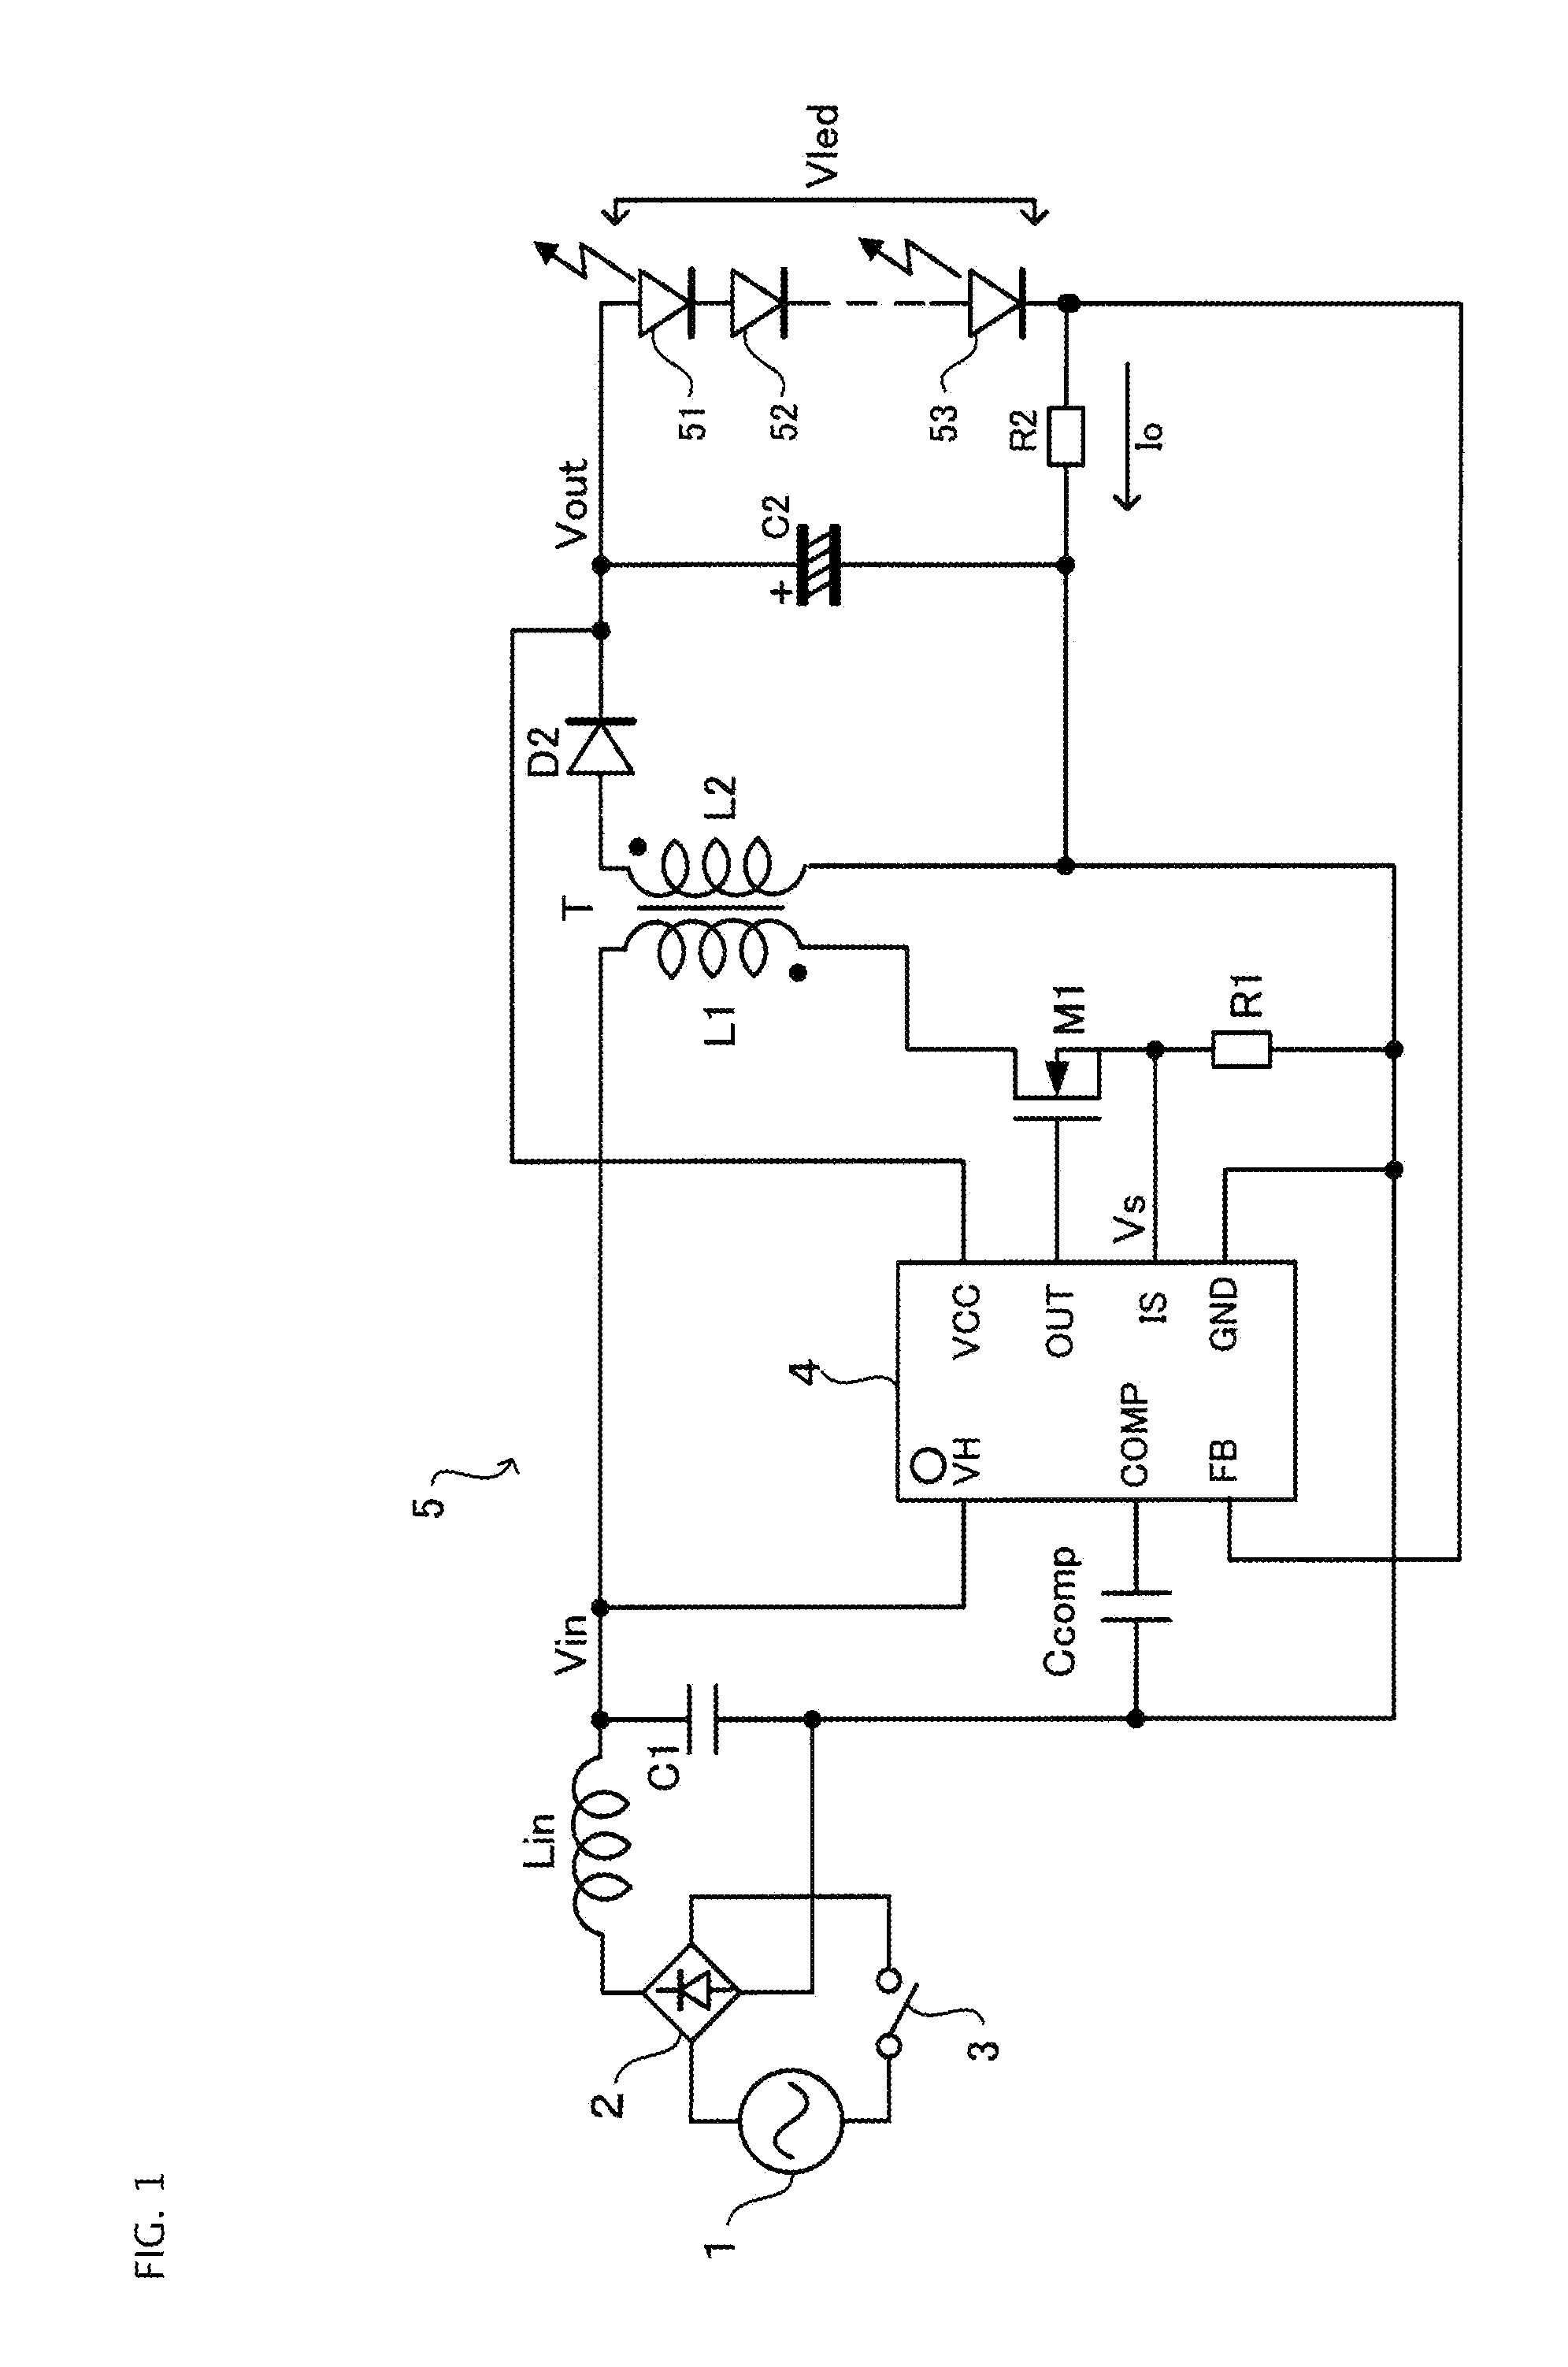 LED drive circuit